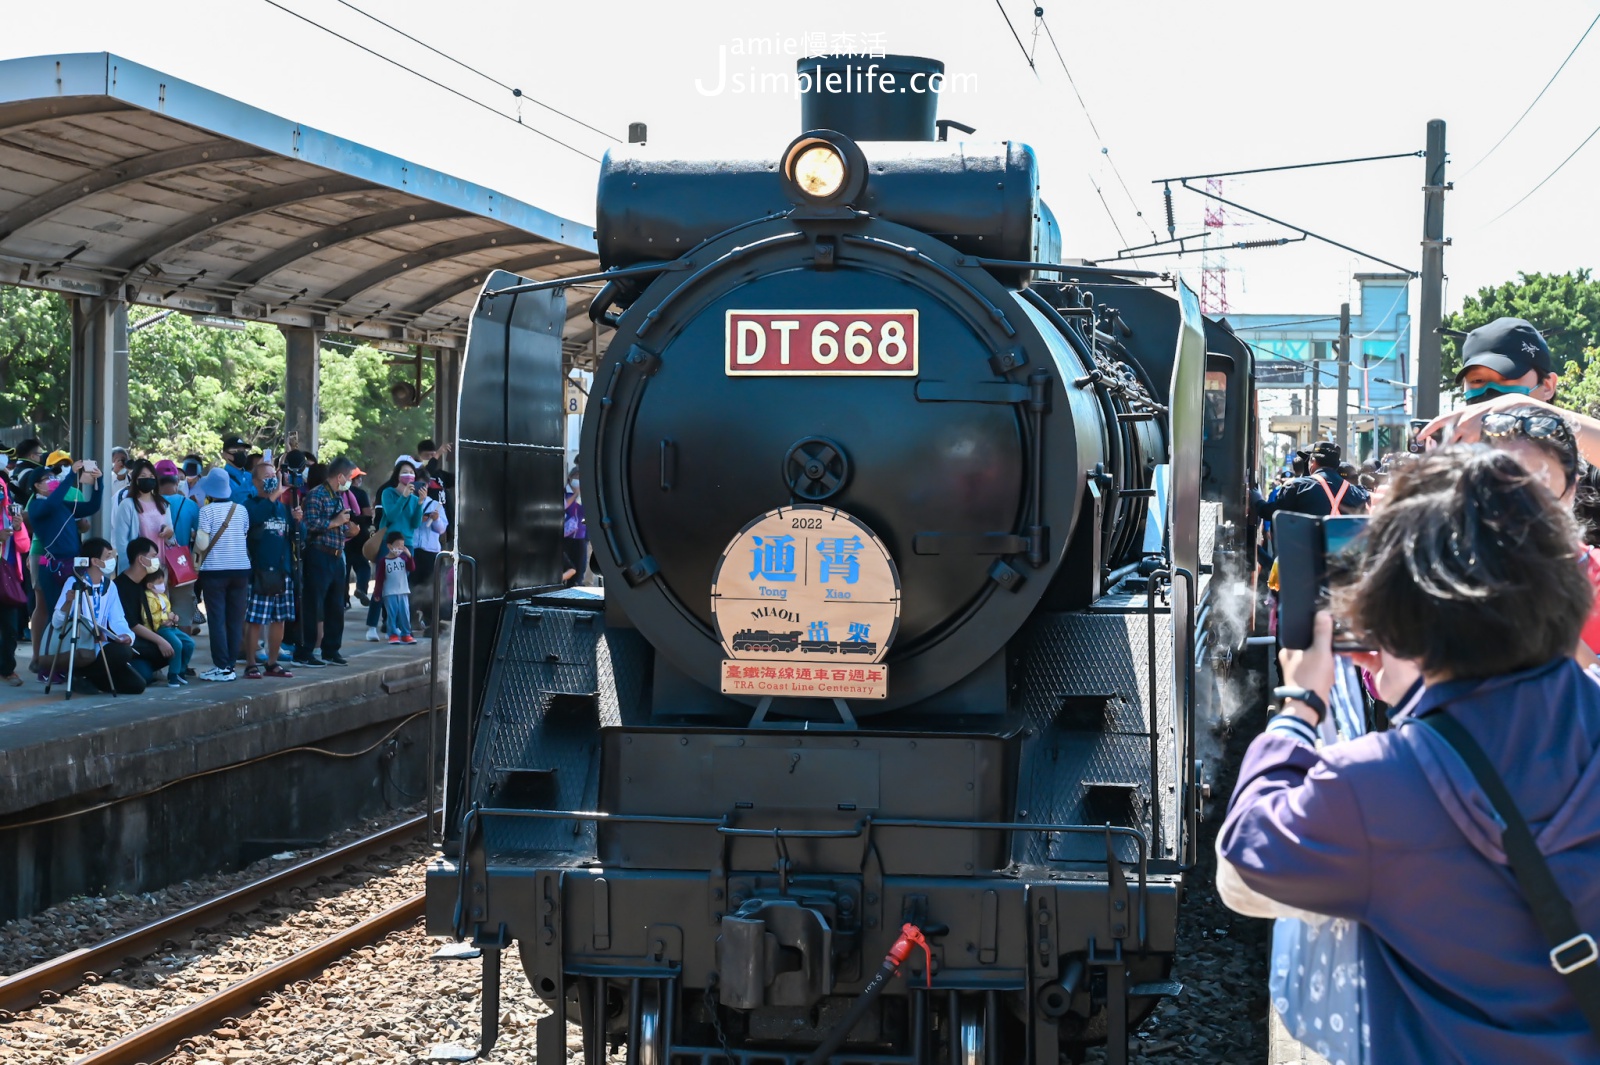 DT668蒸汽火車 國王蒸氣火車在苗栗通霄火車站